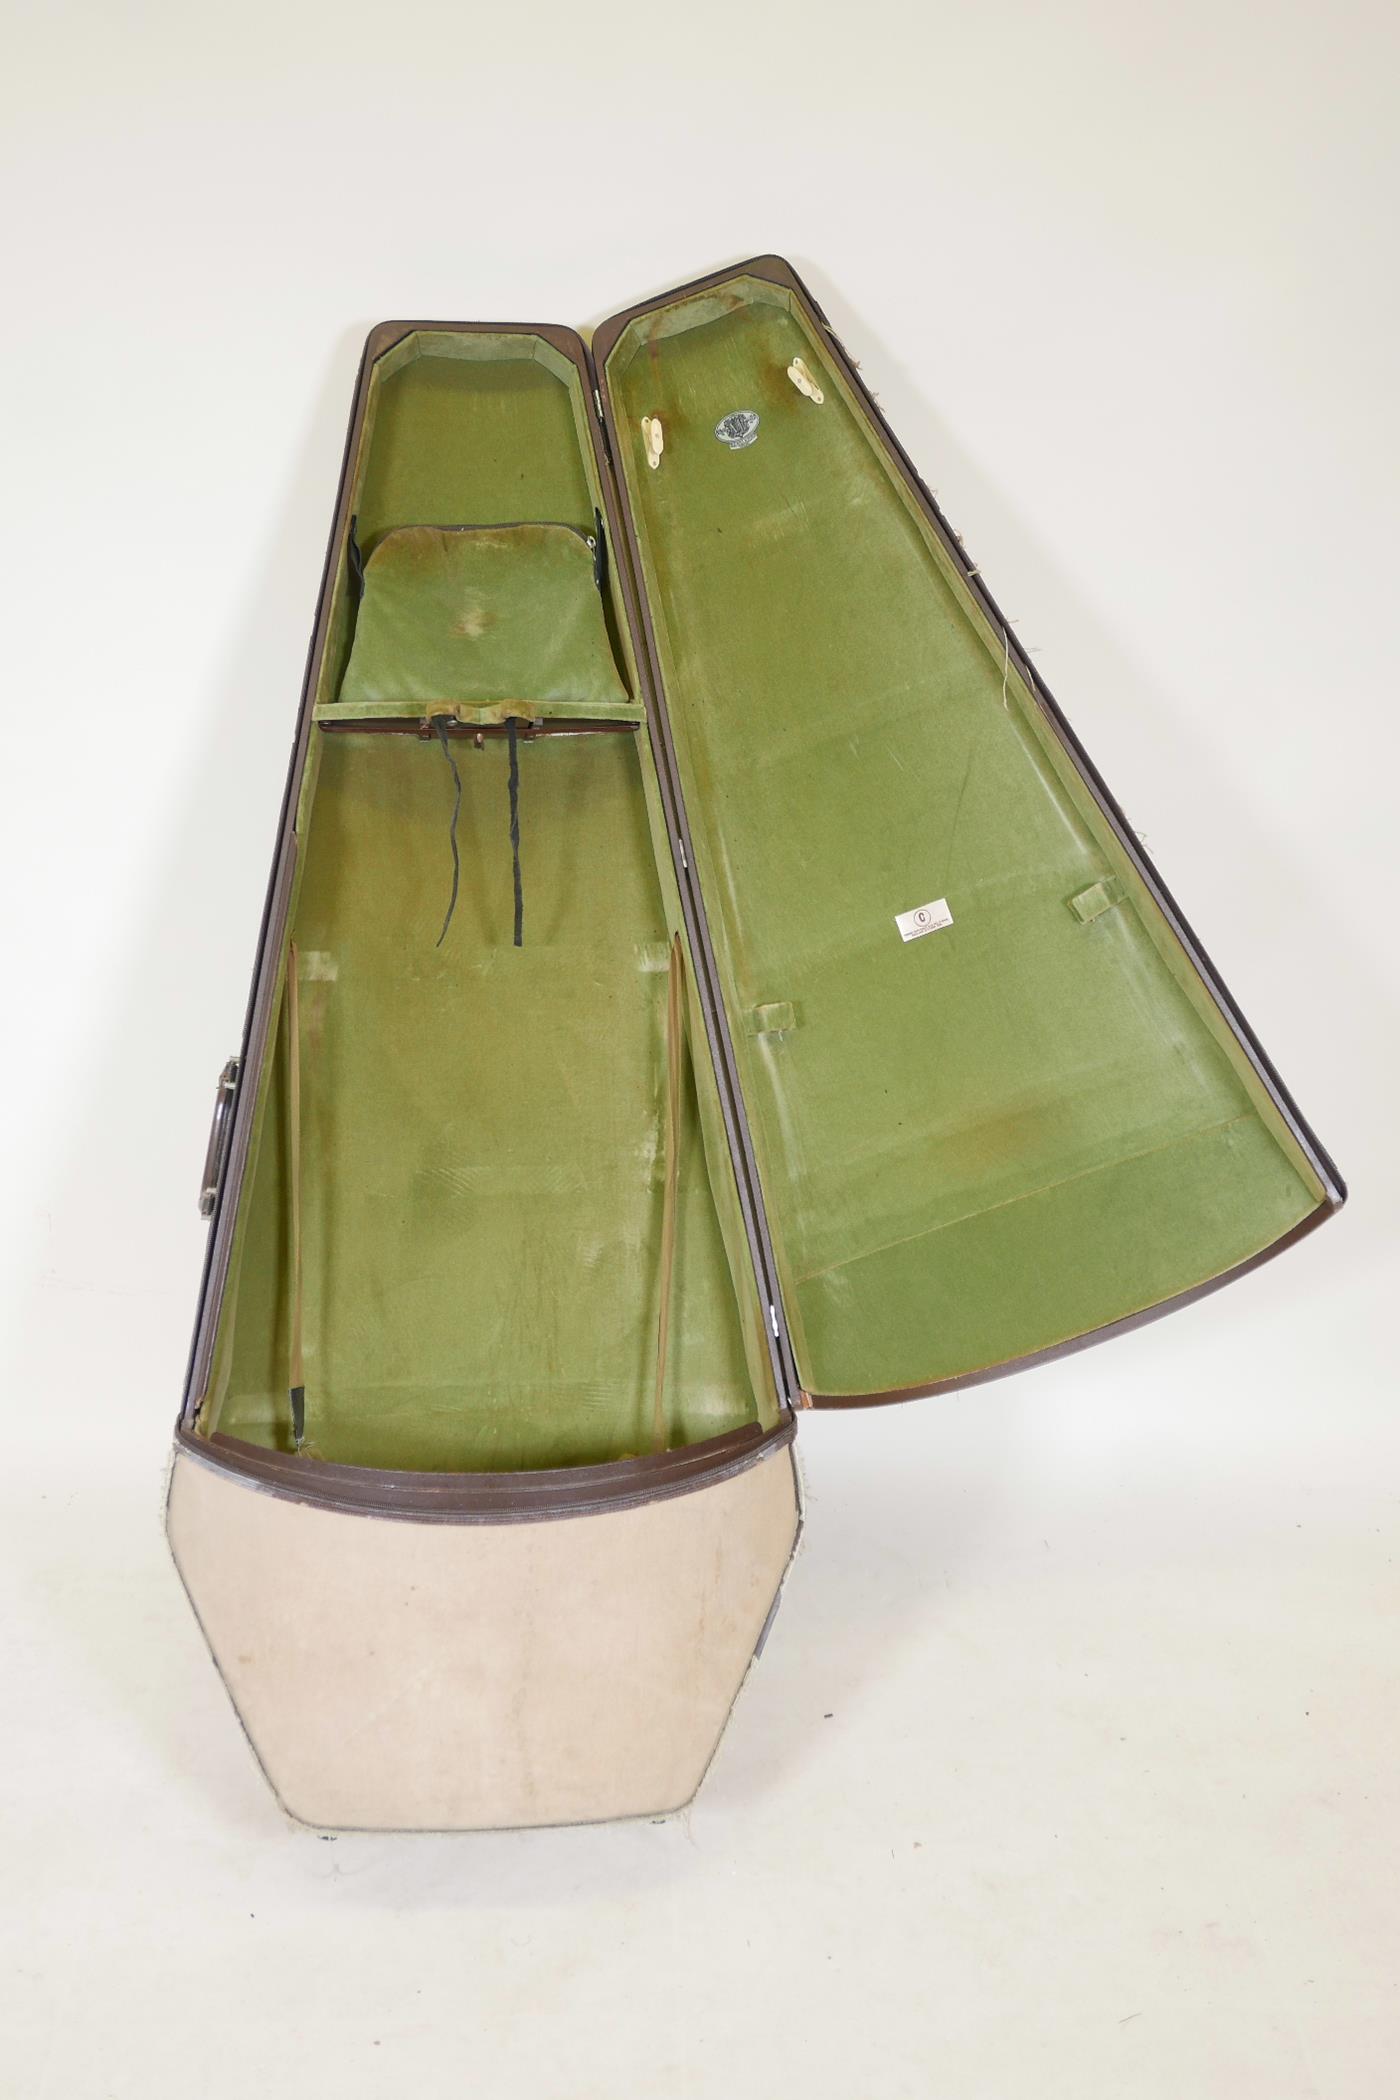 A W.E. Hill & Sons canvas wrapped cello case, 52" x 21" - Image 2 of 4